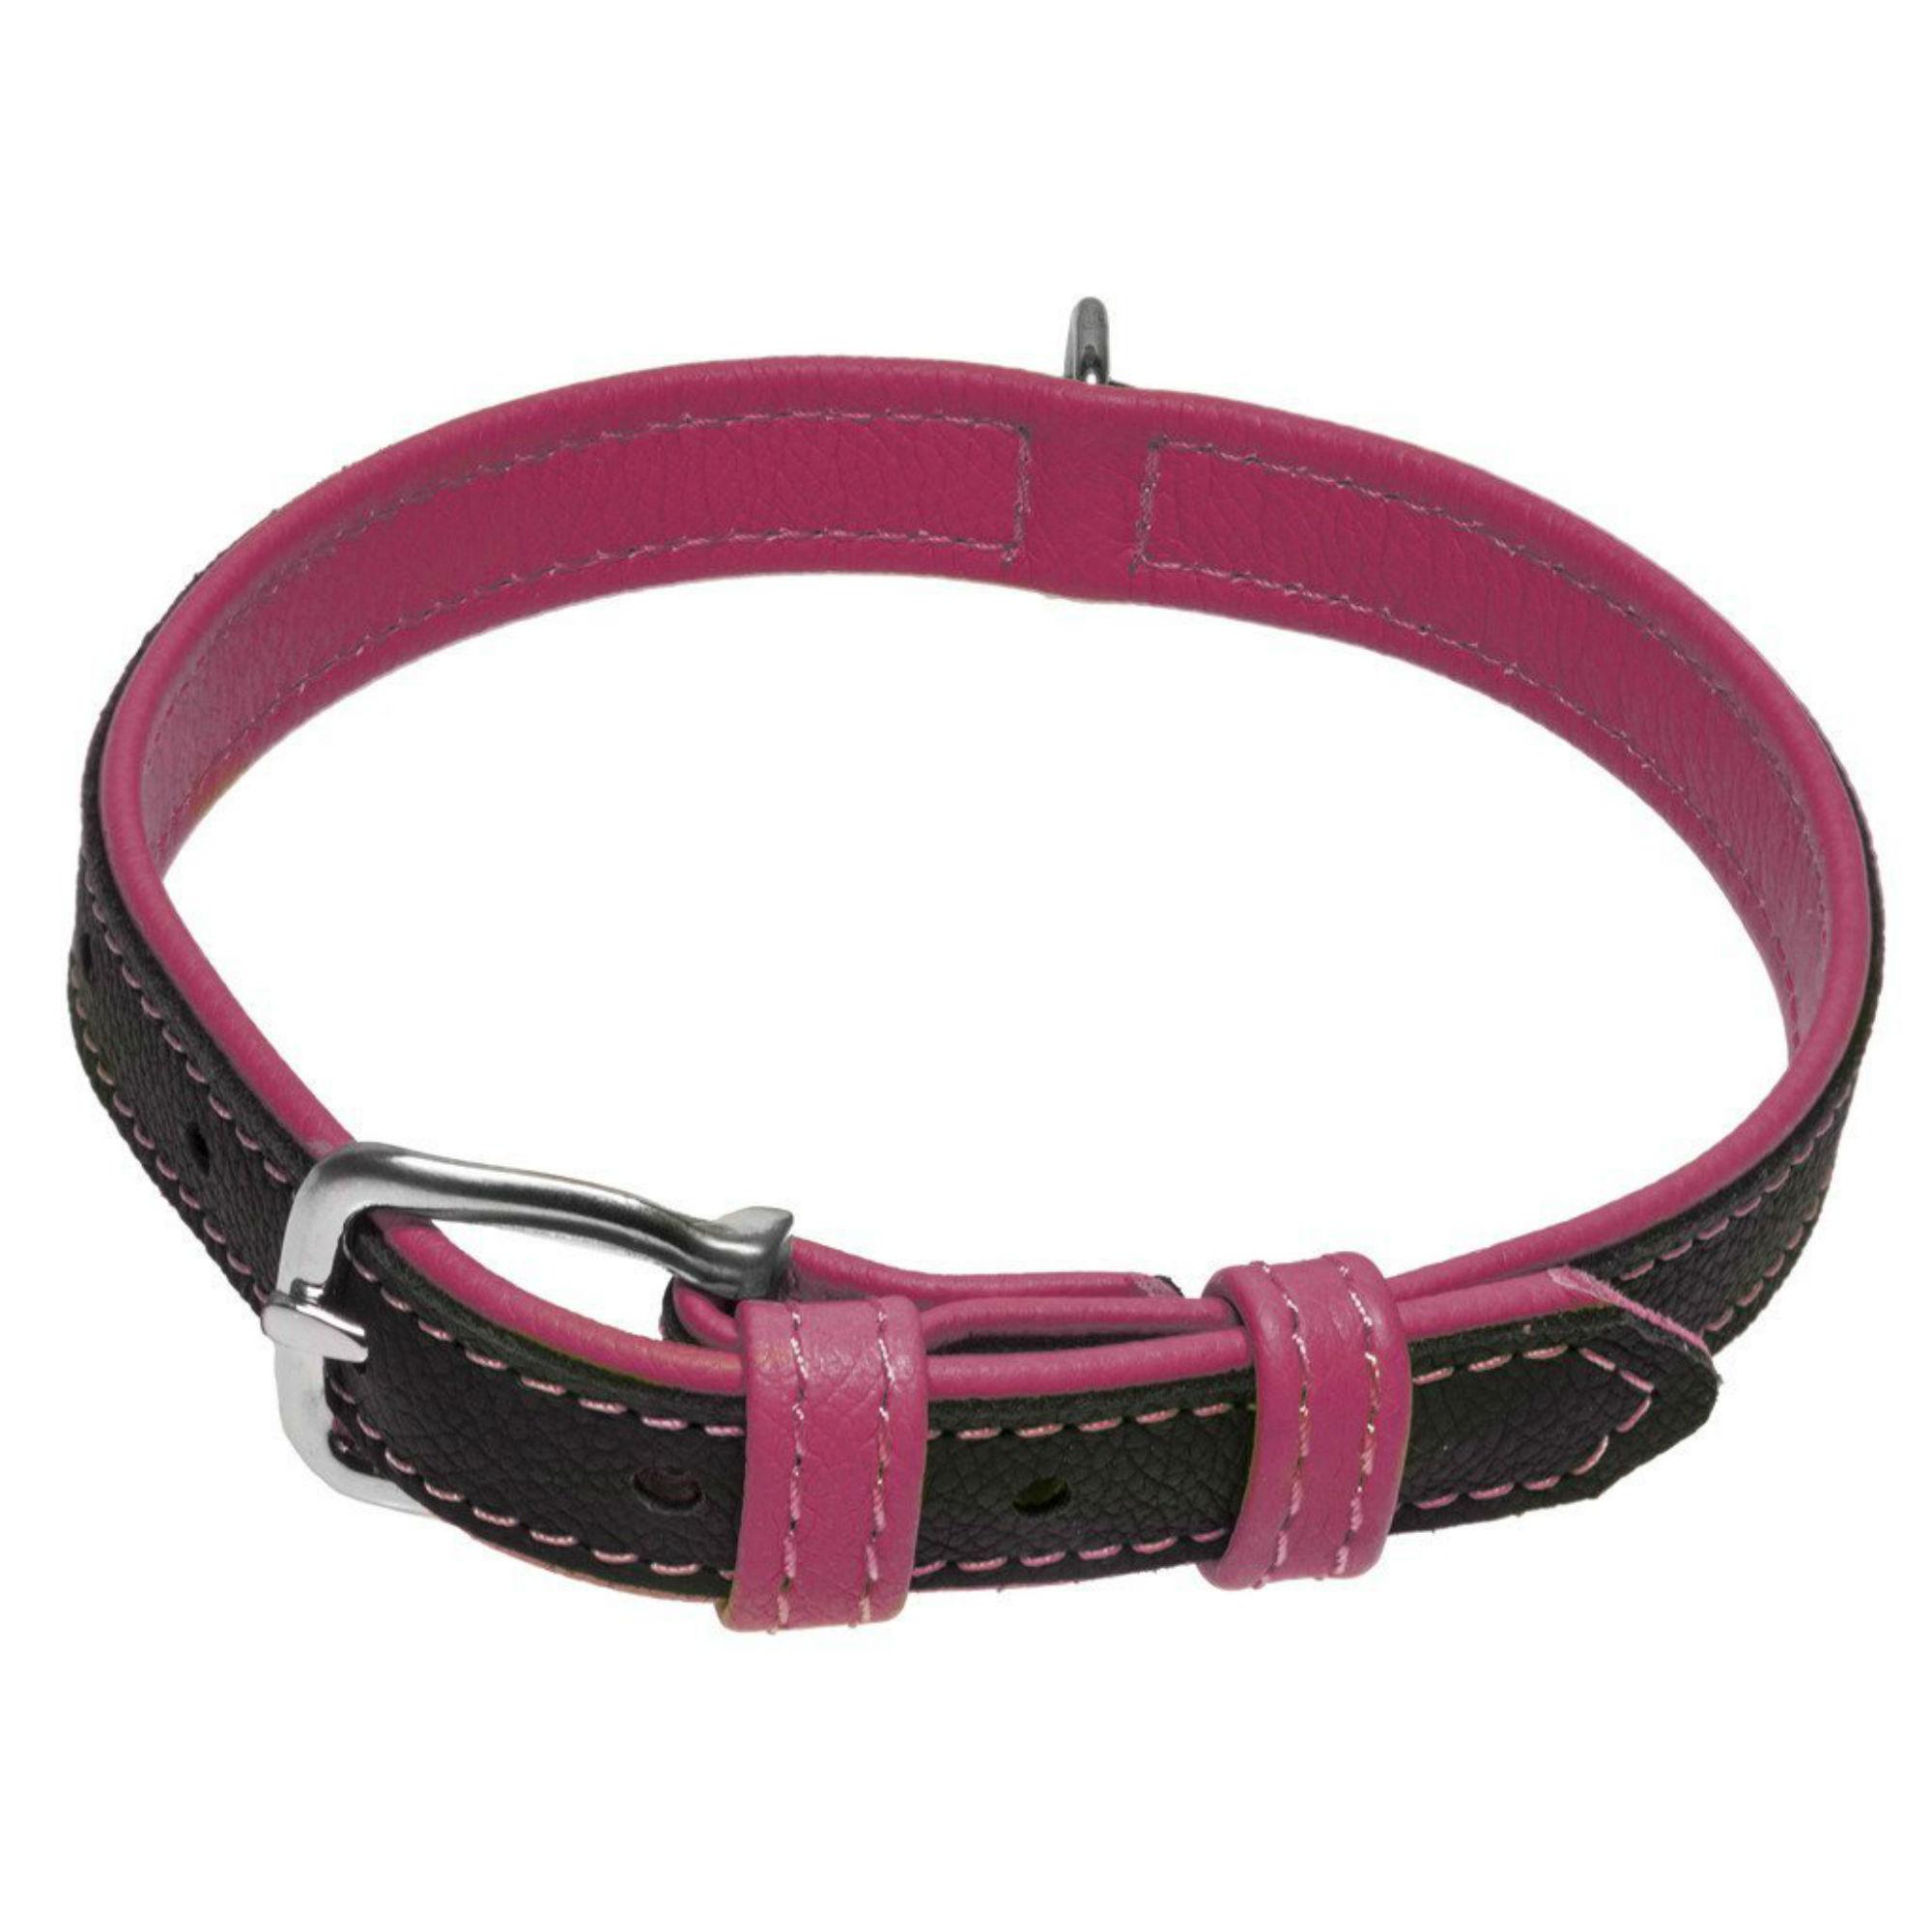 Dogline Soft Leather Dual Color Dog Collar - Hot Pink